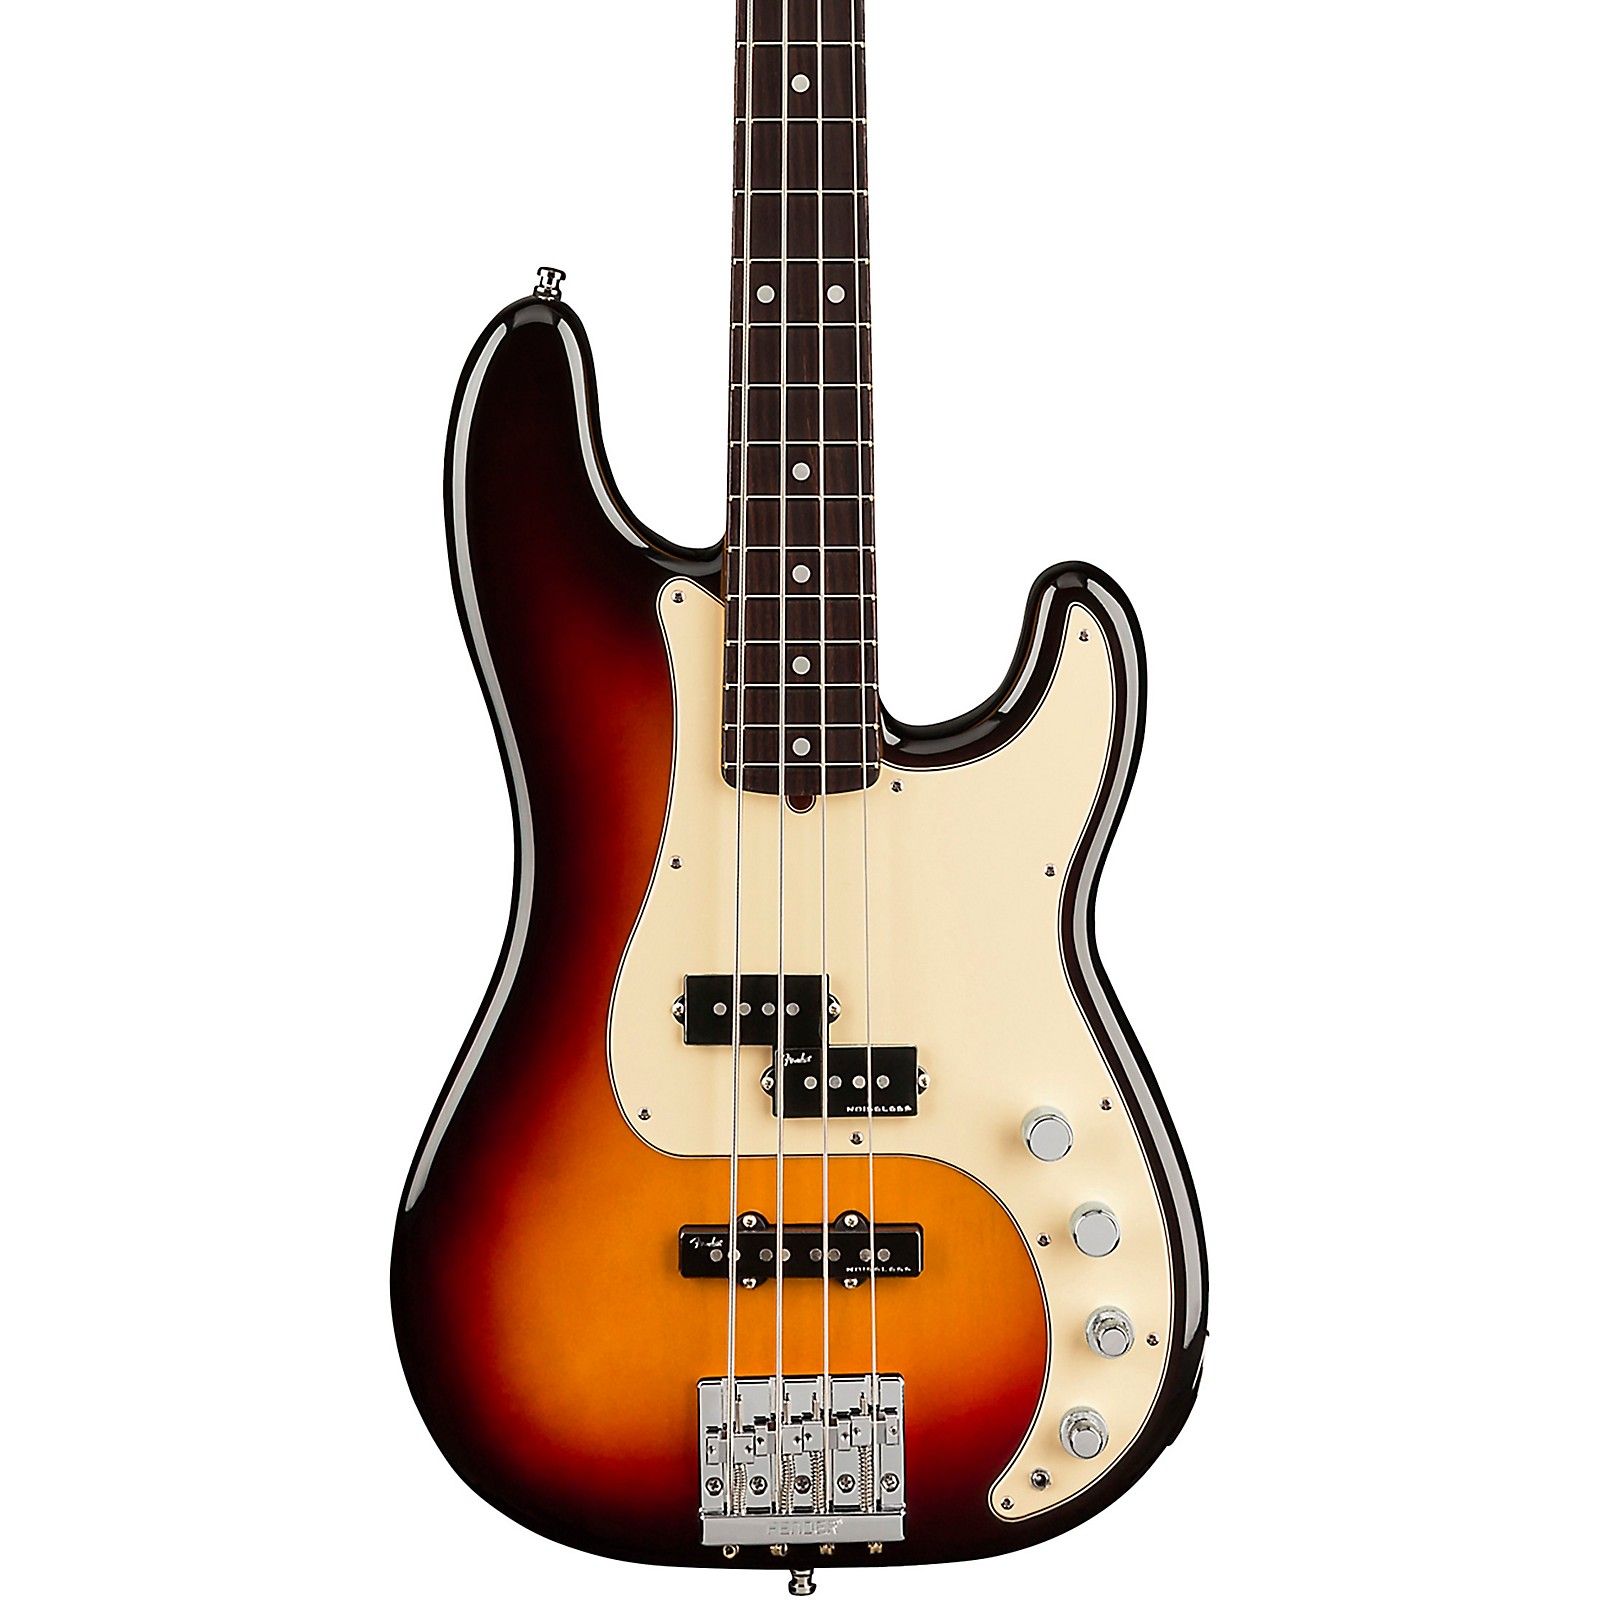 Reina Hay una necesidad de celos Fender American Ultra Precision Bass Rosewood Fingerboard Ultraburst |  Guitar Center